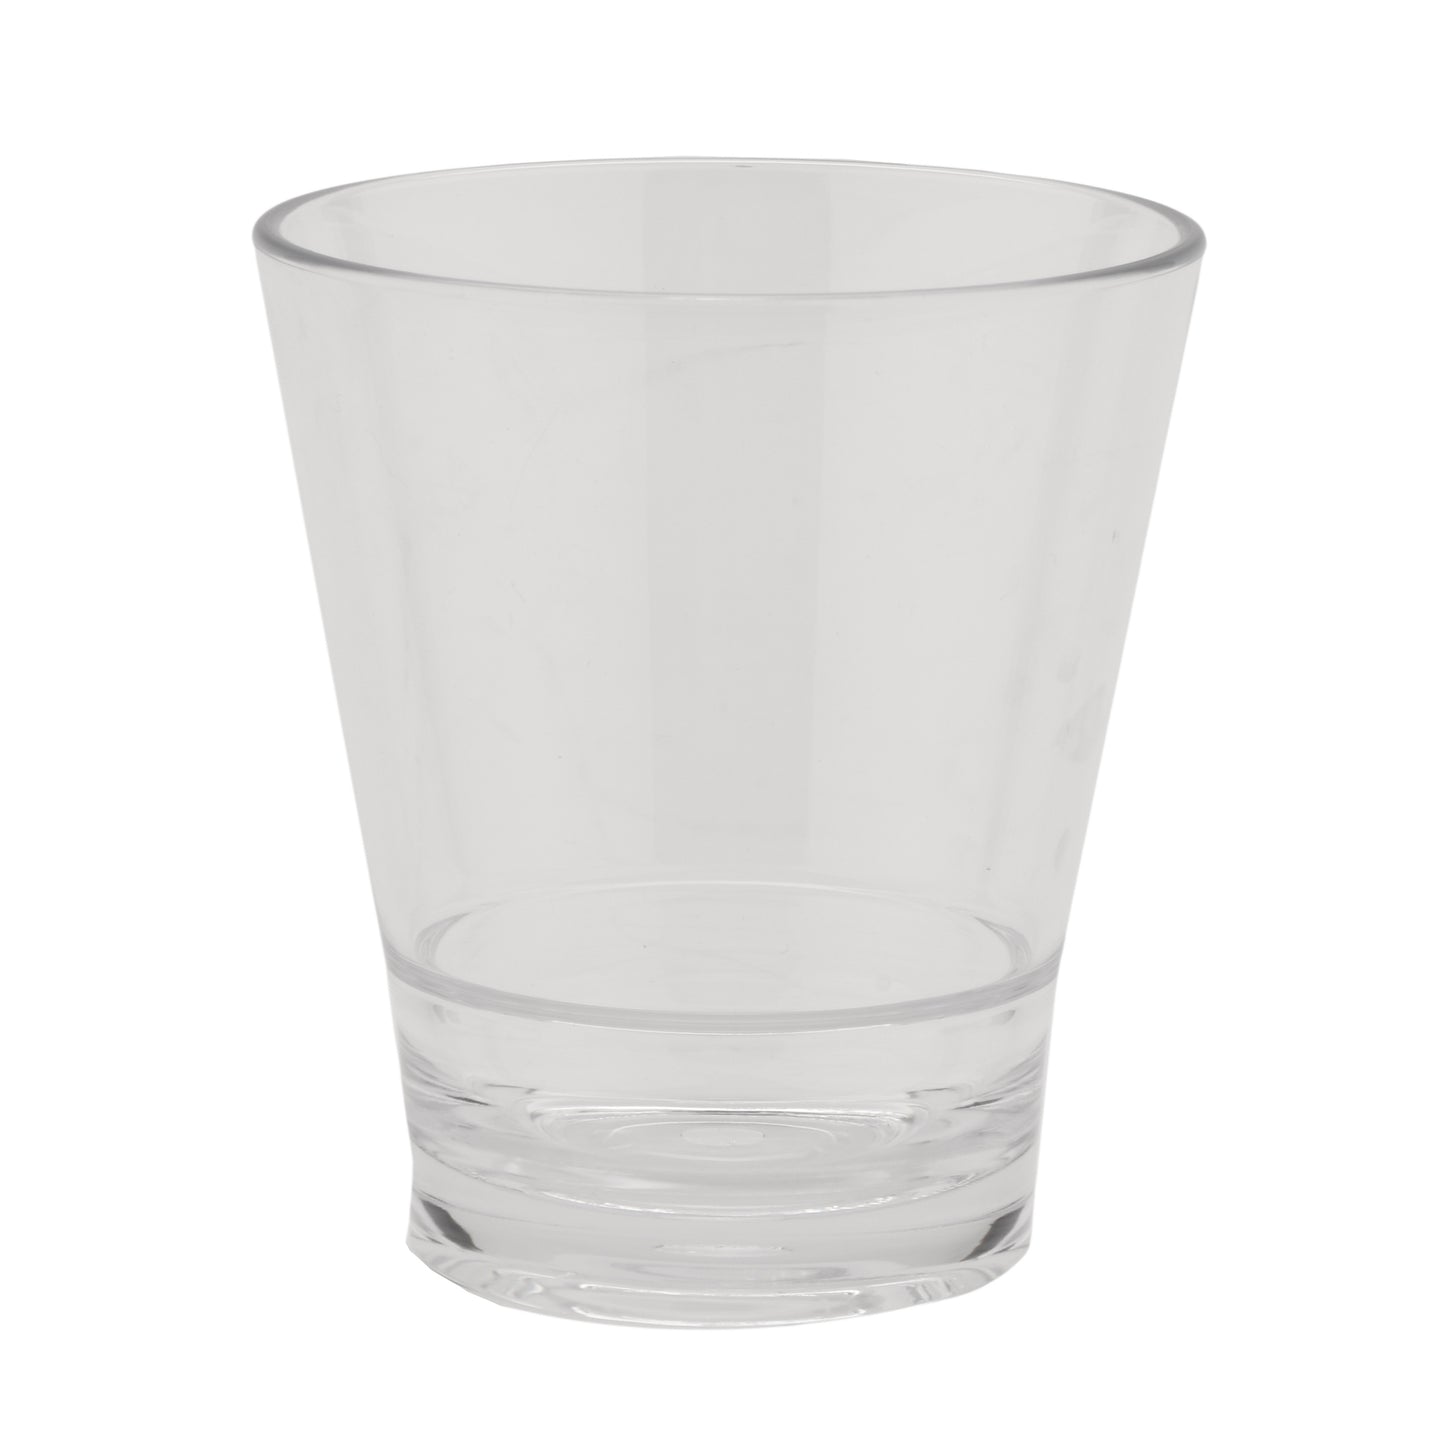 12 oz. Rim-Full Stackable Glass (12 Pack)